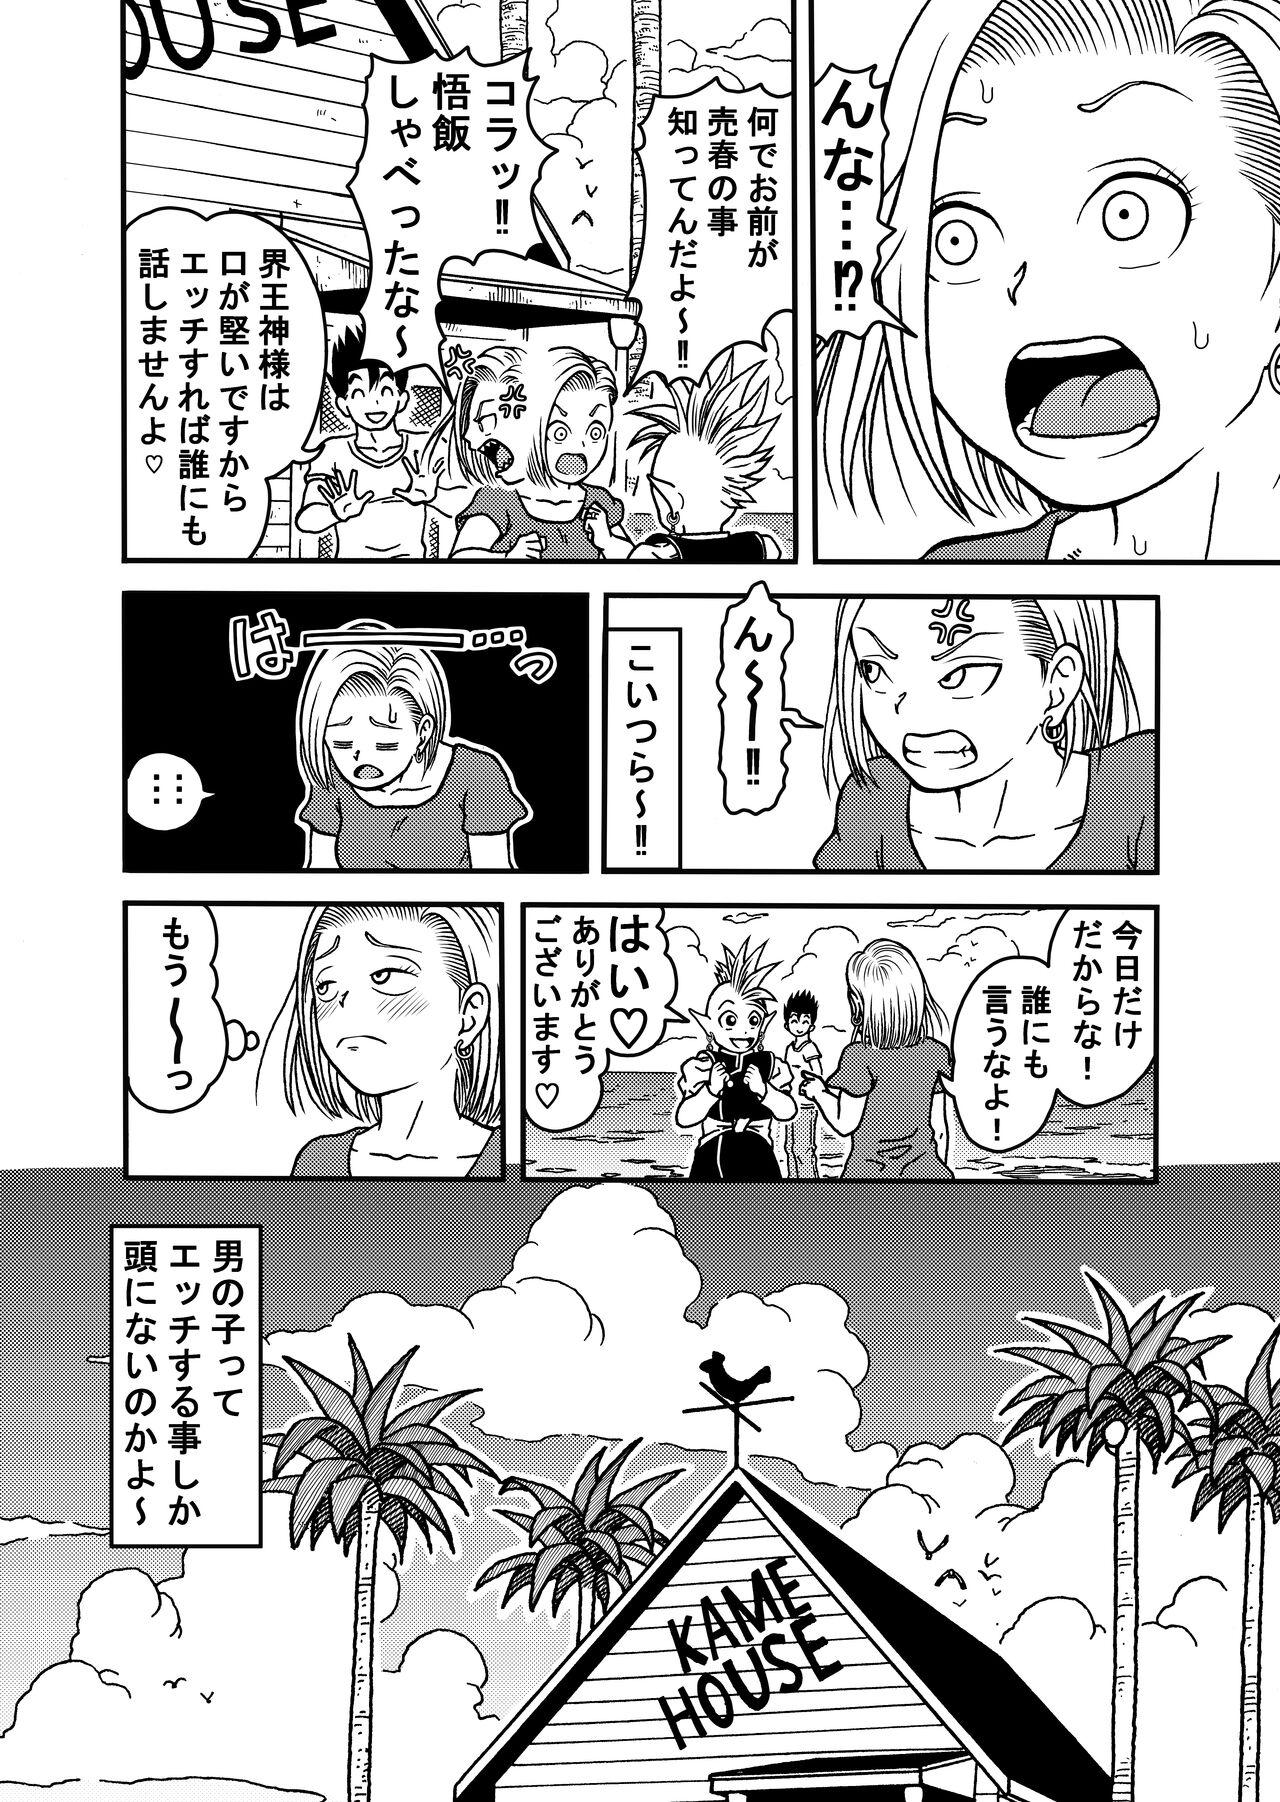 Tiny 18-gou NTR Nakadashi on Parade 5 - Dragon ball z Class - Page 10